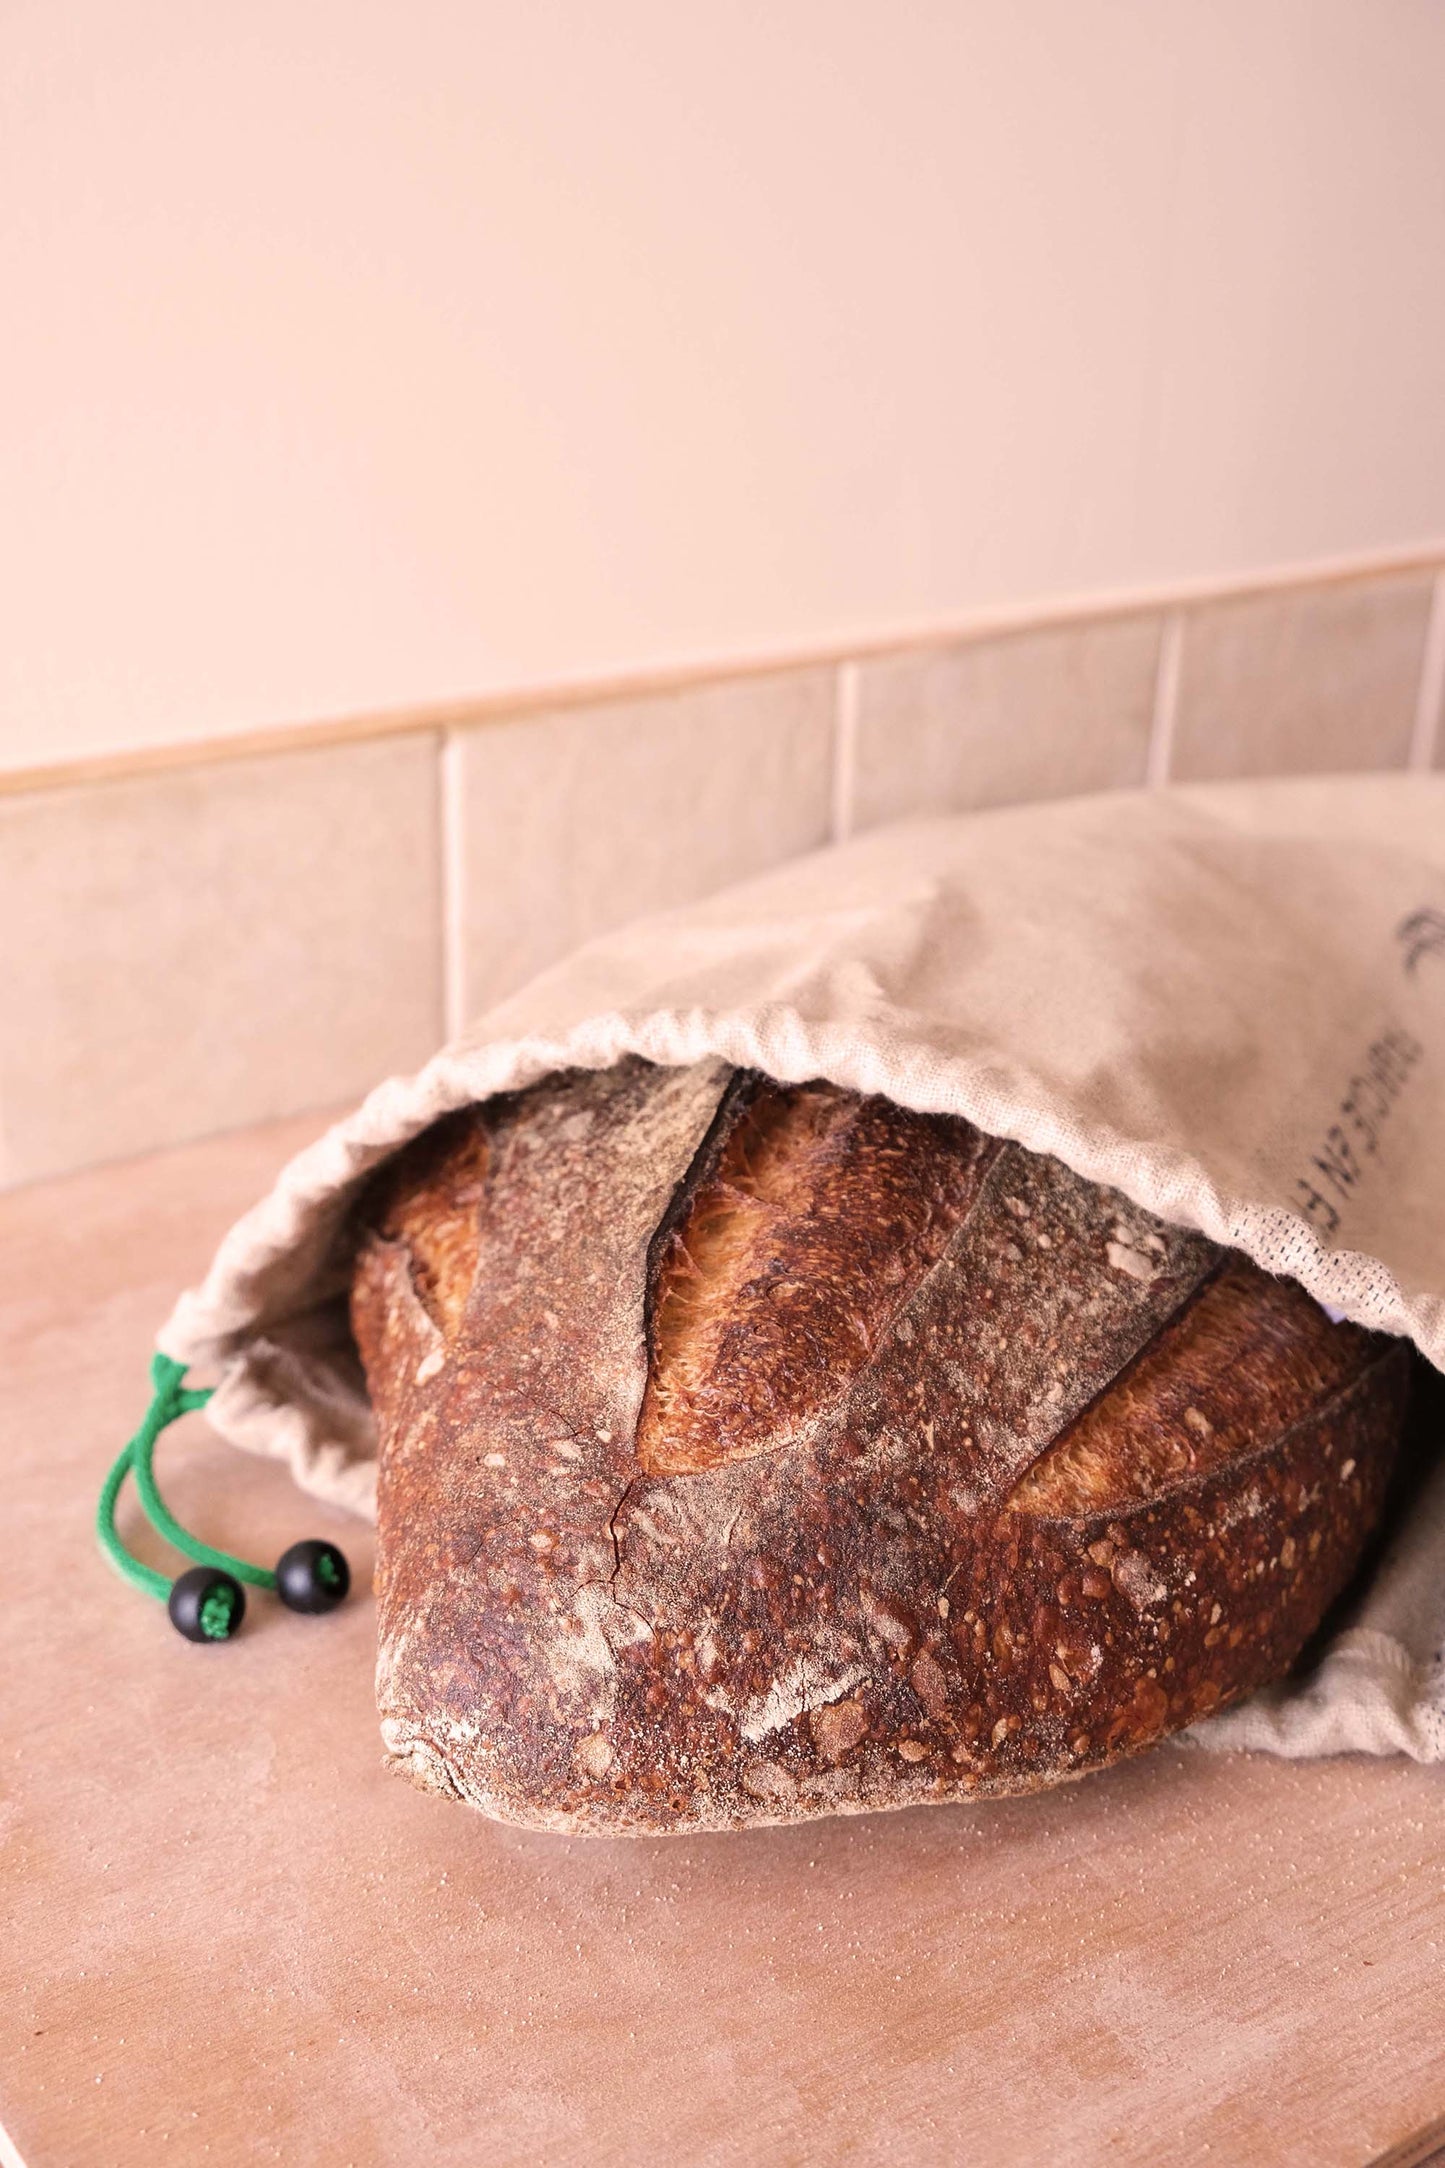 Bread Bag